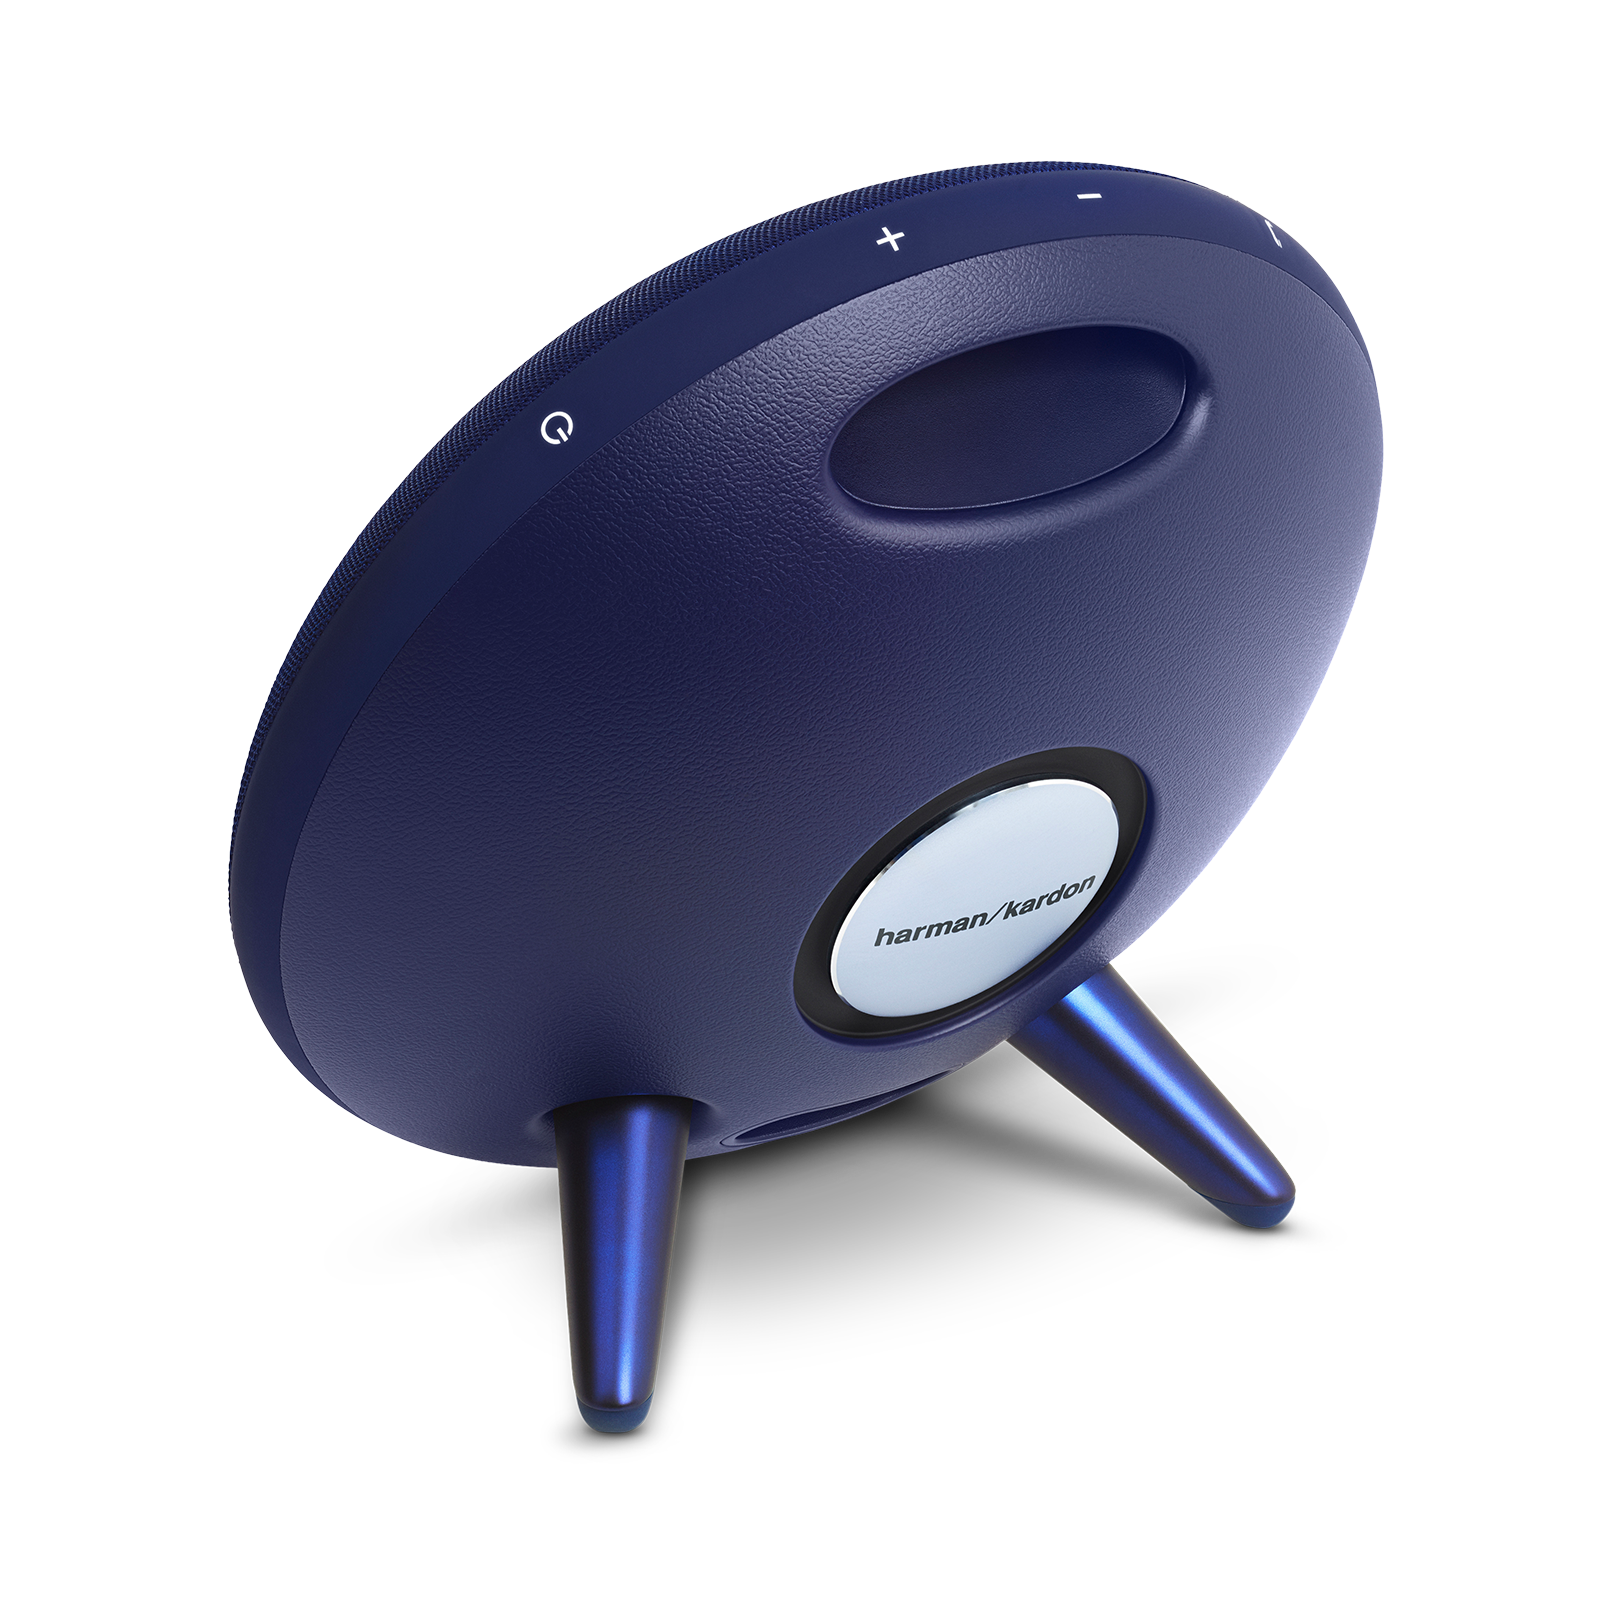 Onyx Studio 3 - Blue - Portable Bluetooth Speaker - Detailshot 2